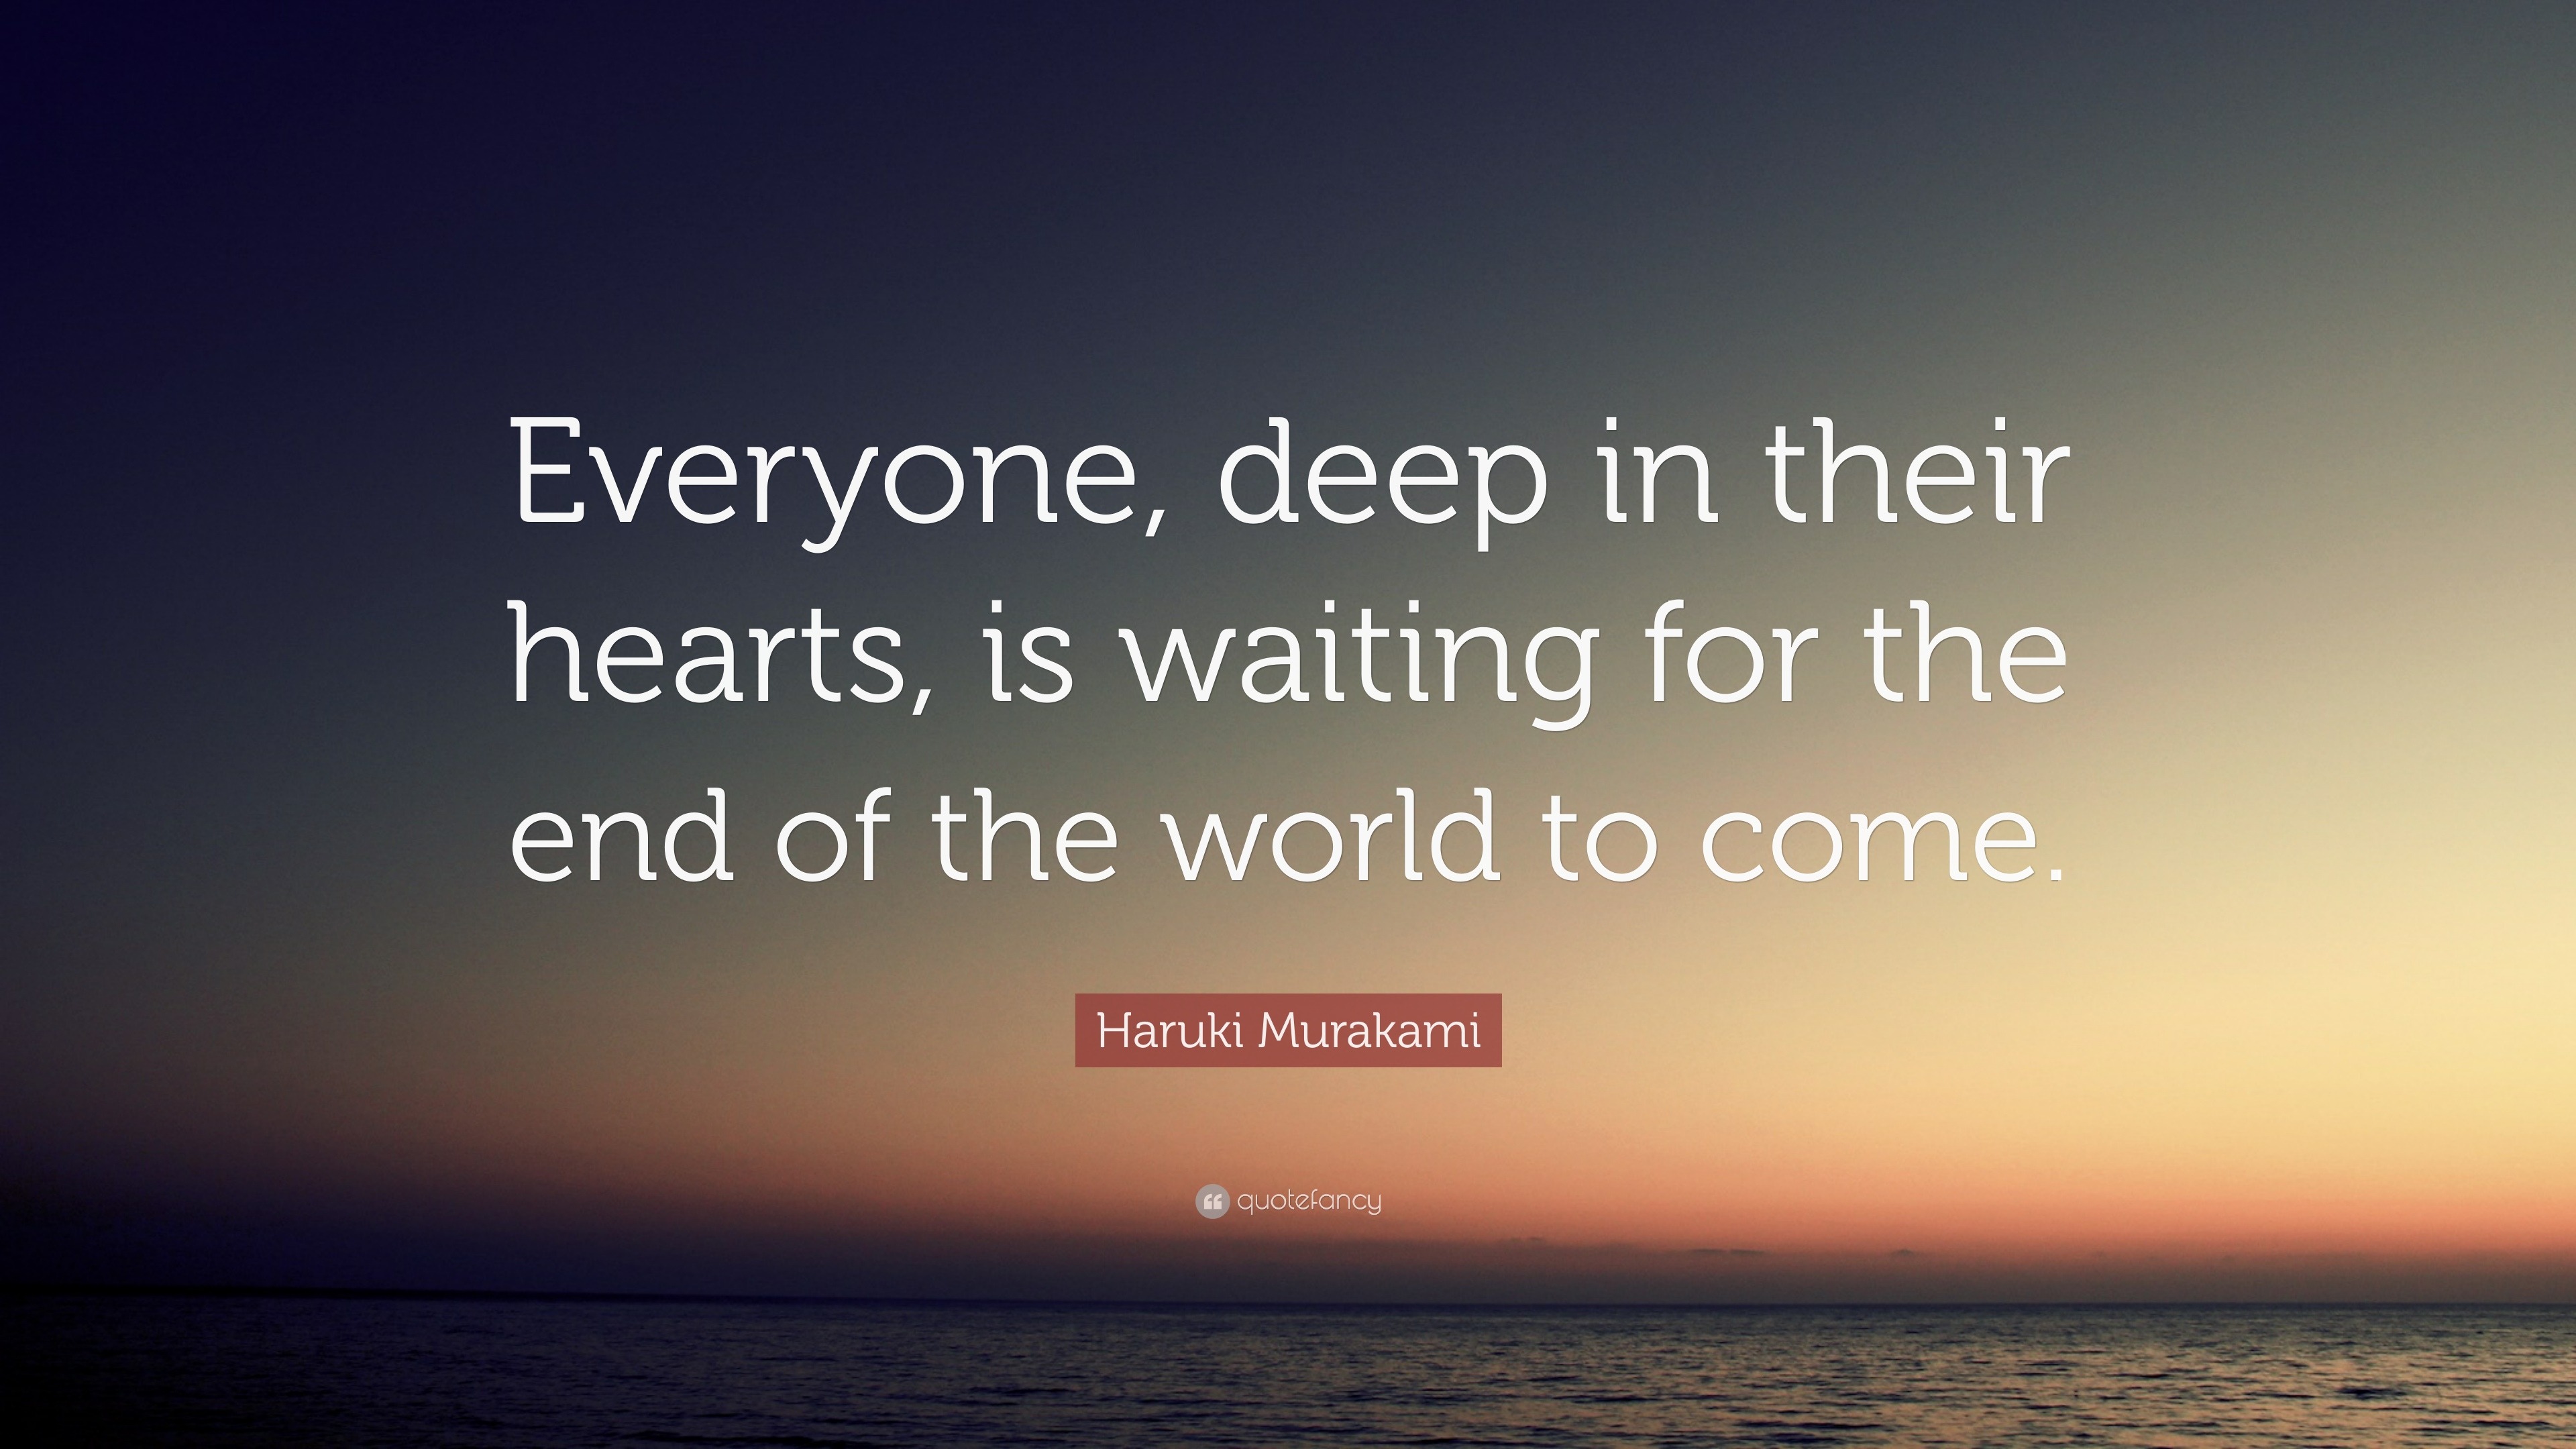 Haruki Murakami Quote “everyone Deep In Their Hearts Is